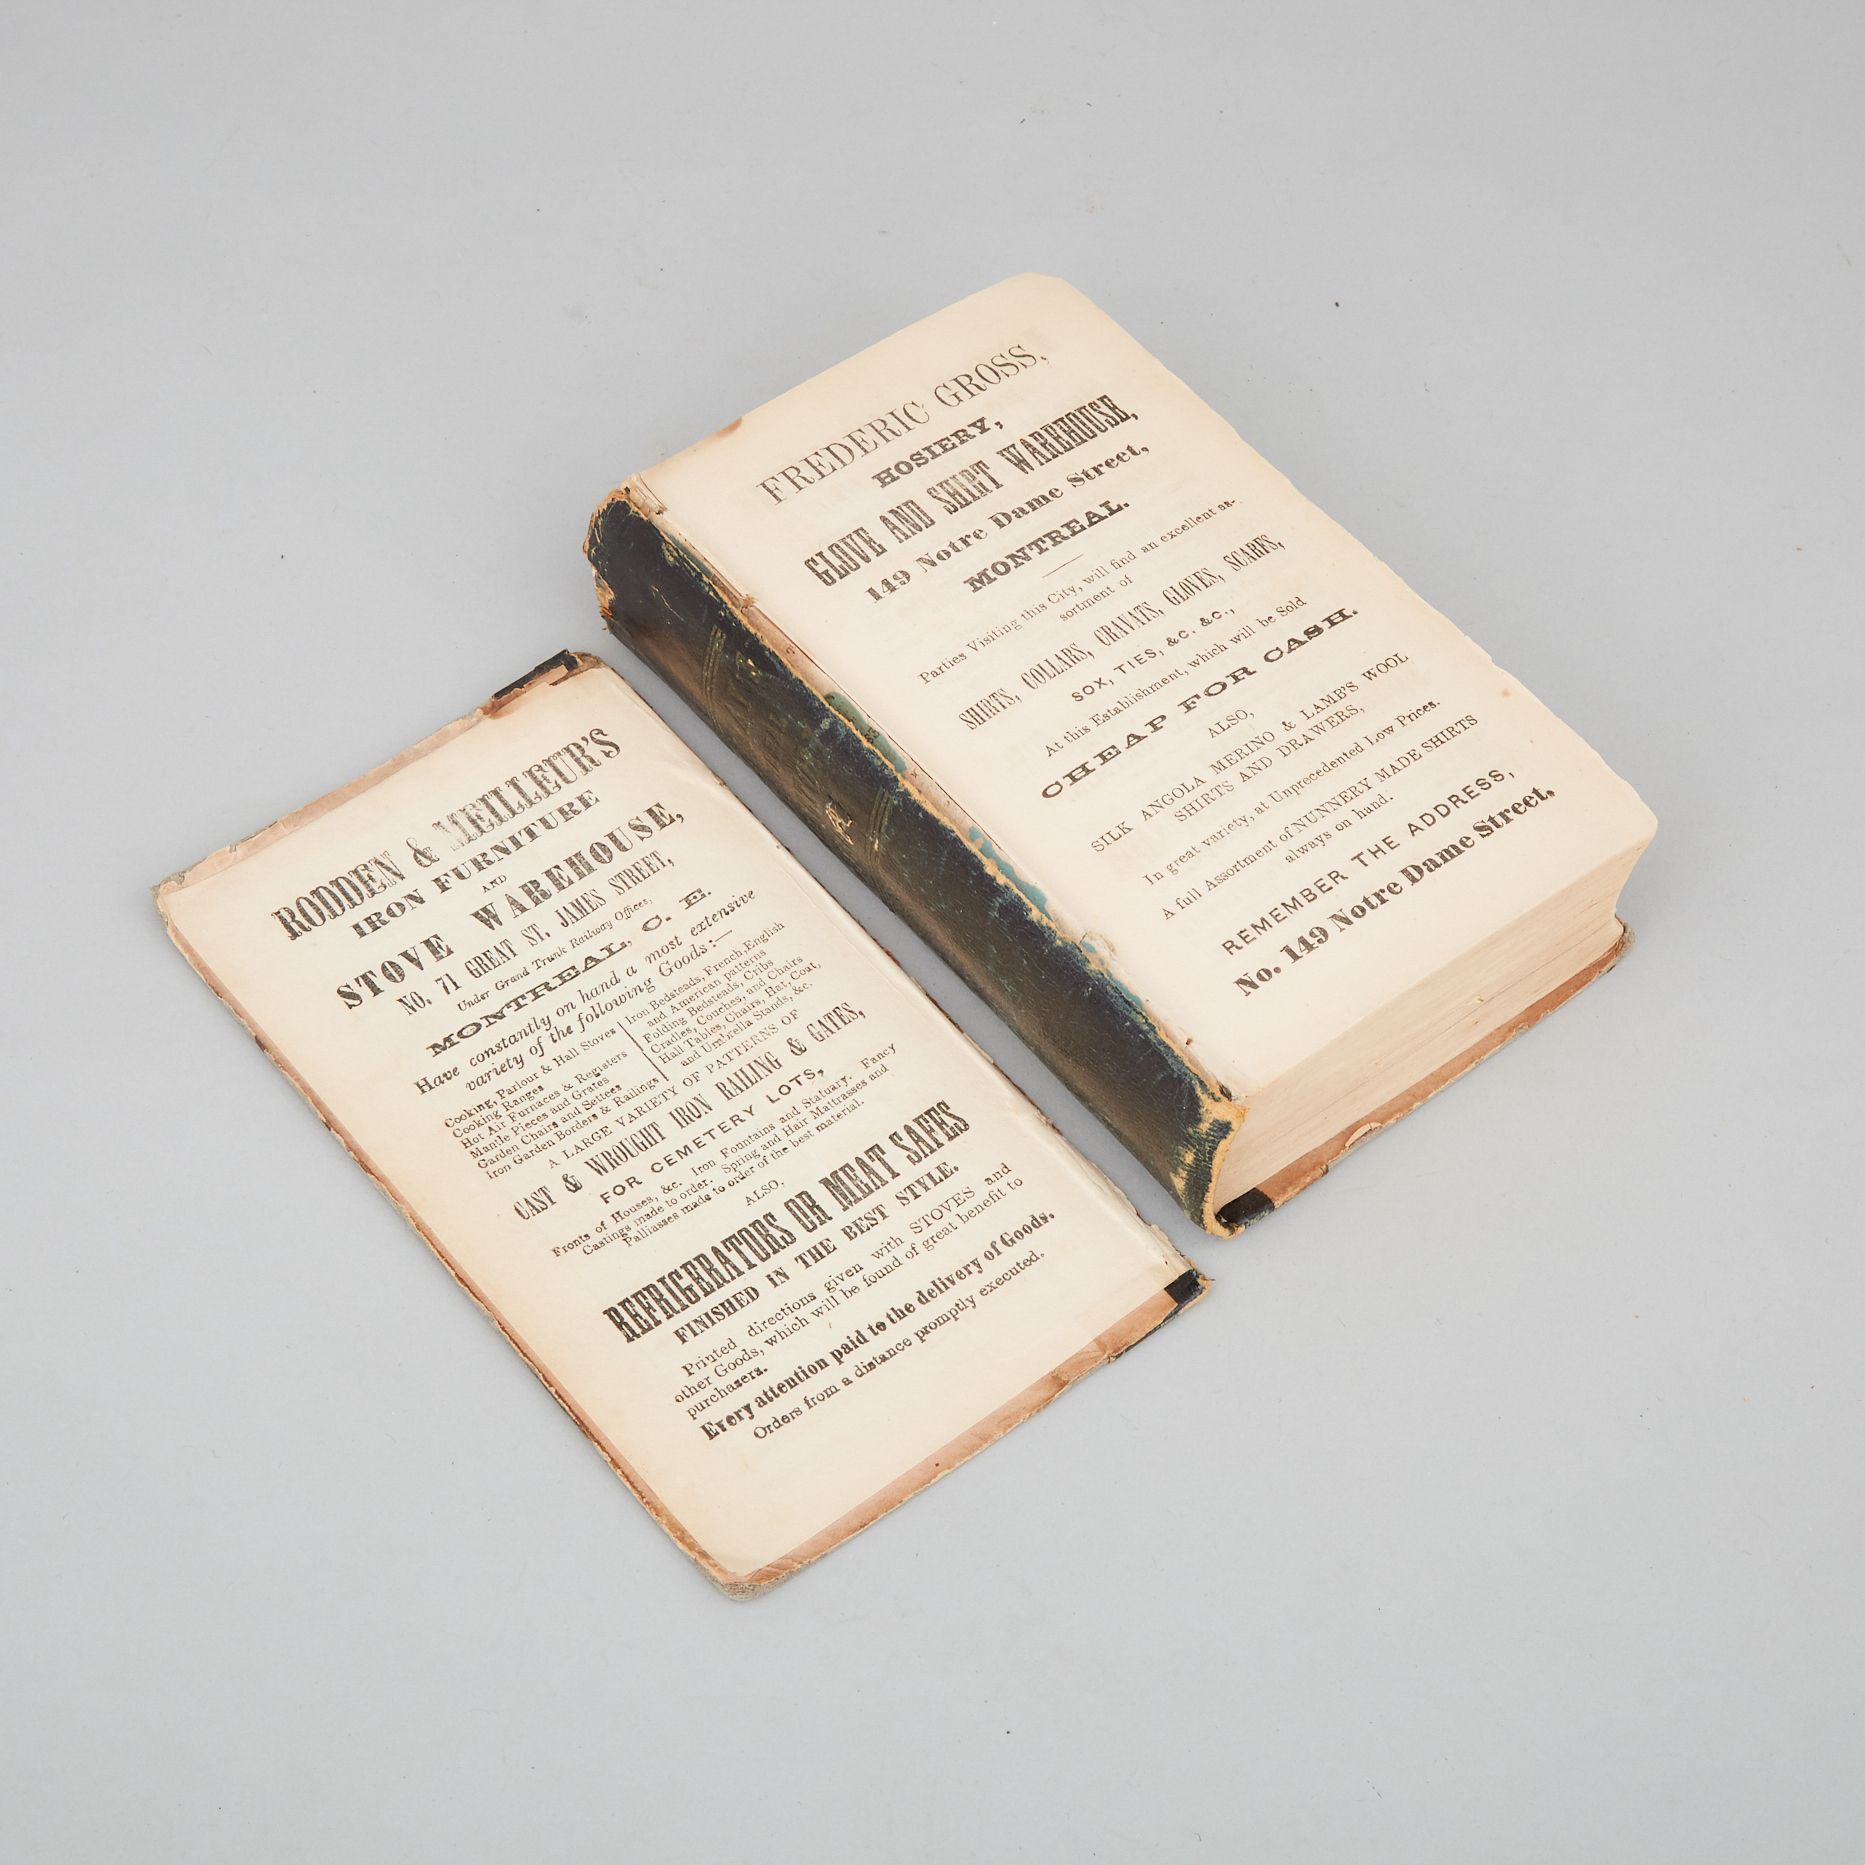 Mackay's Montreal Directory, 1858